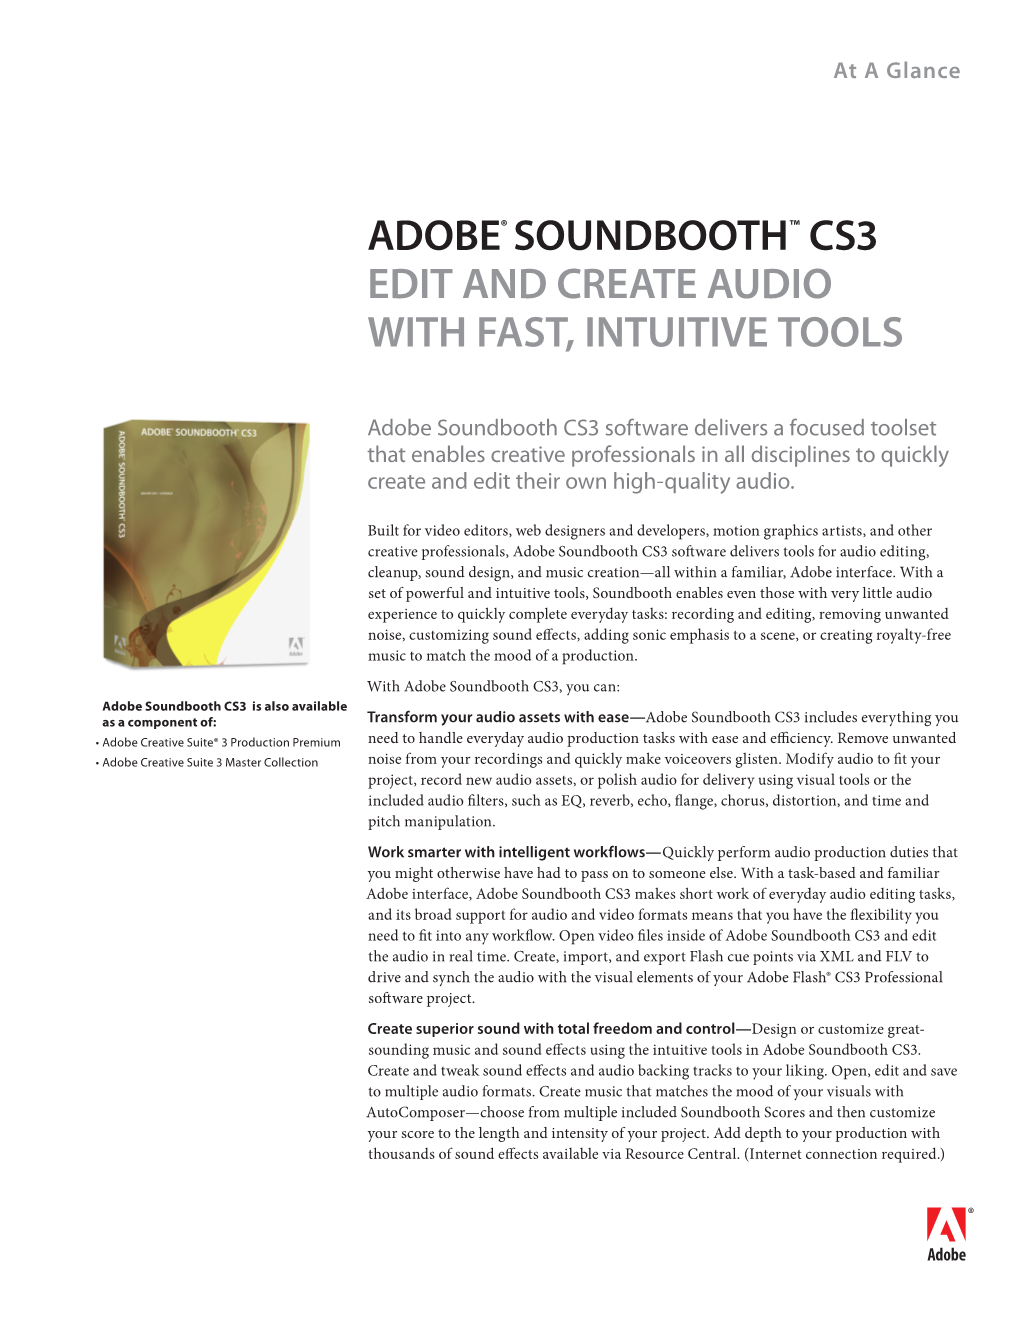 Adobe Soundbooth CS3 at a Glance